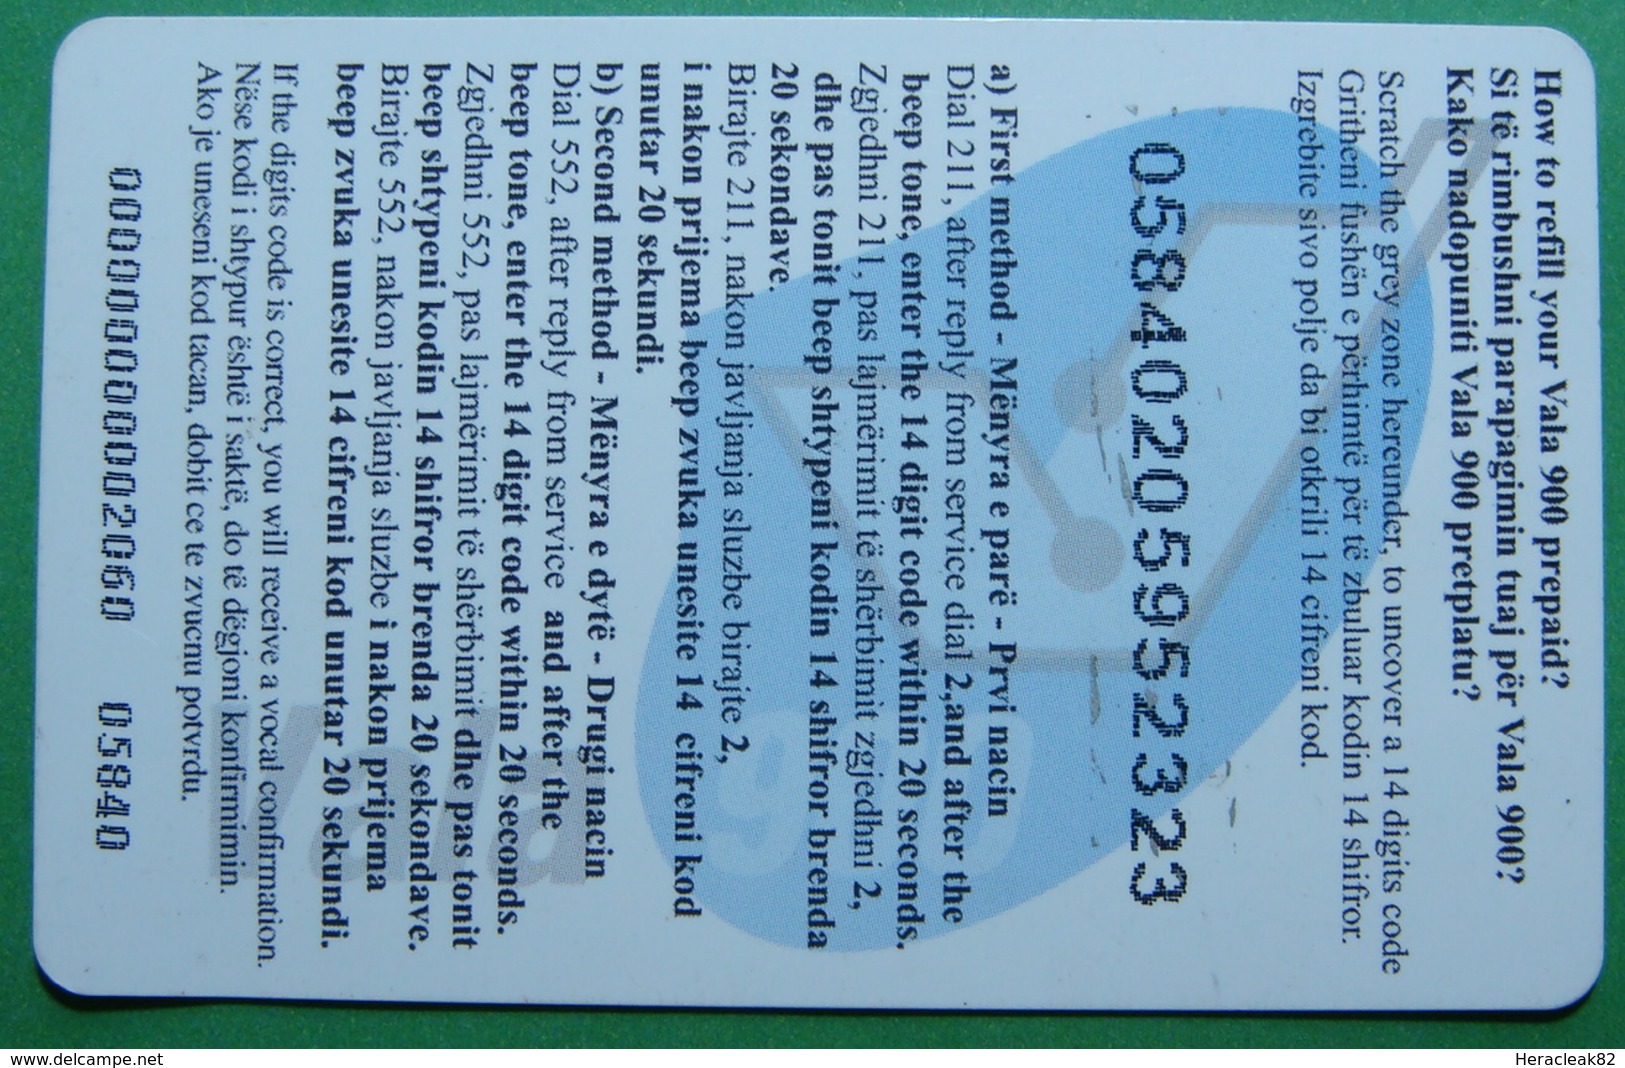 2 Ed.Kosovo PREPAID PHONE CARD 30 EURO USED Operator VALA900 Serial # 05840 *OLD RUG* - Kosovo